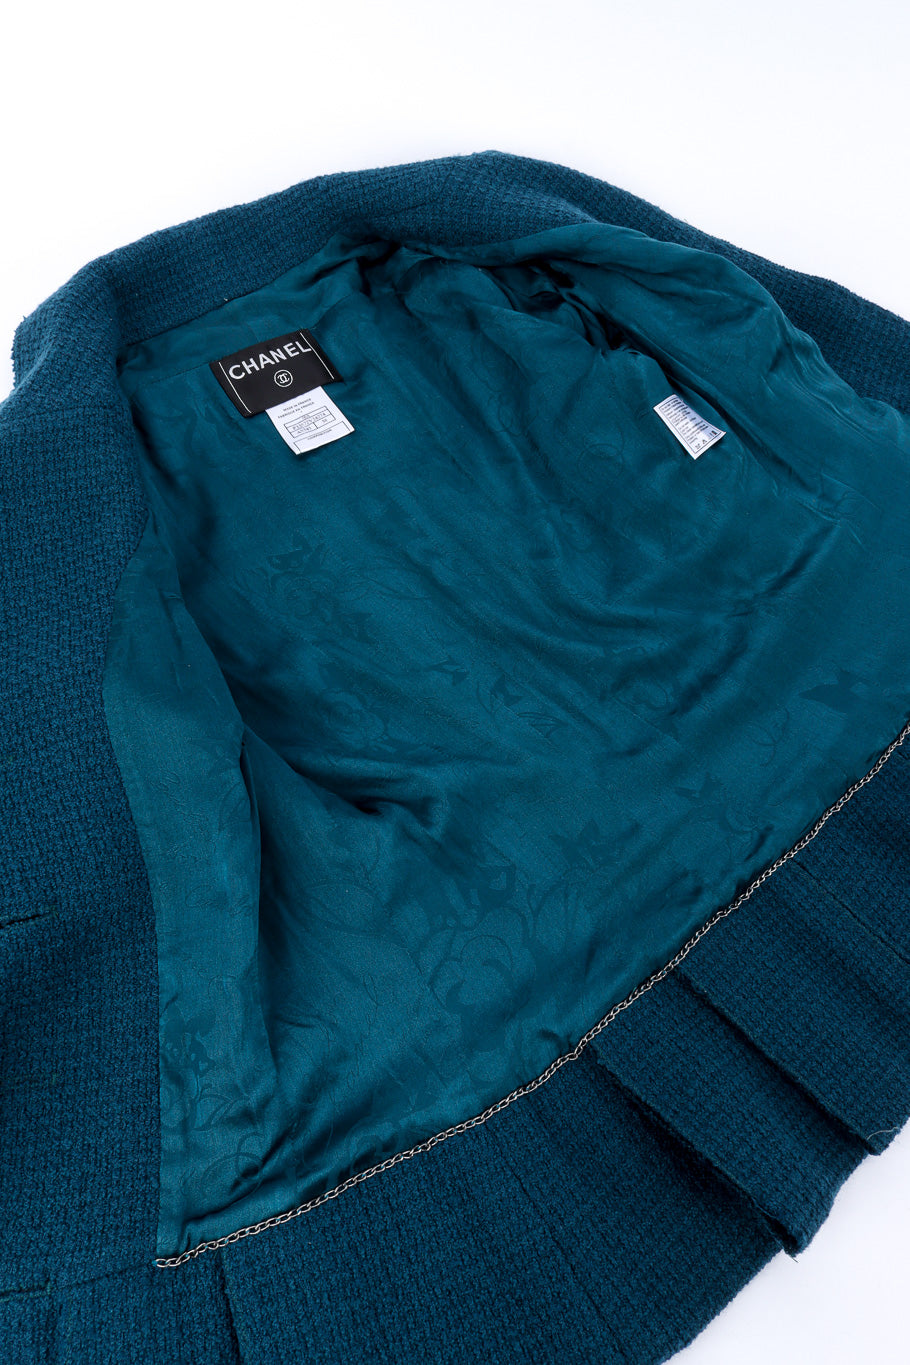 2008A Wool Carwash Hem Jacket & Skirt Set view of jacket lining @Recessla